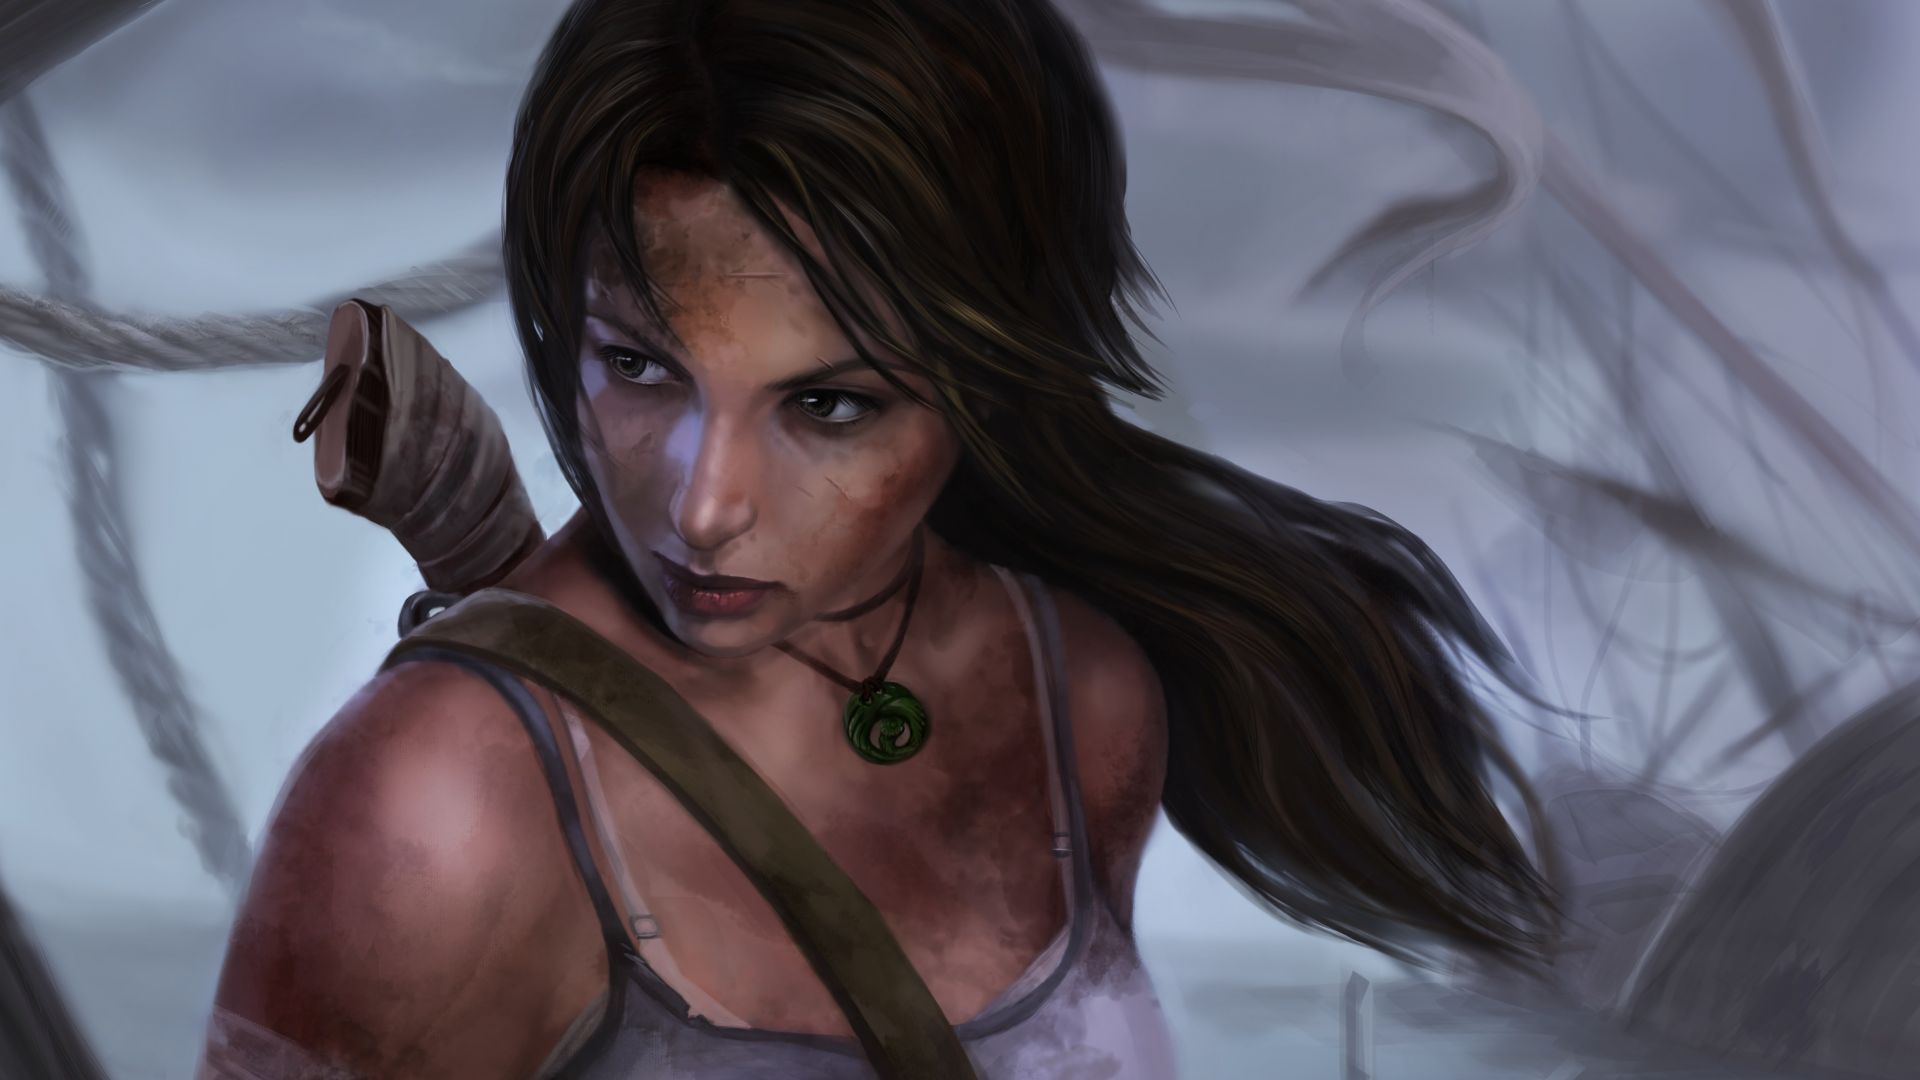 Wallpaper Lara Croft, Tomb Raider, art, girl warrior, gaming